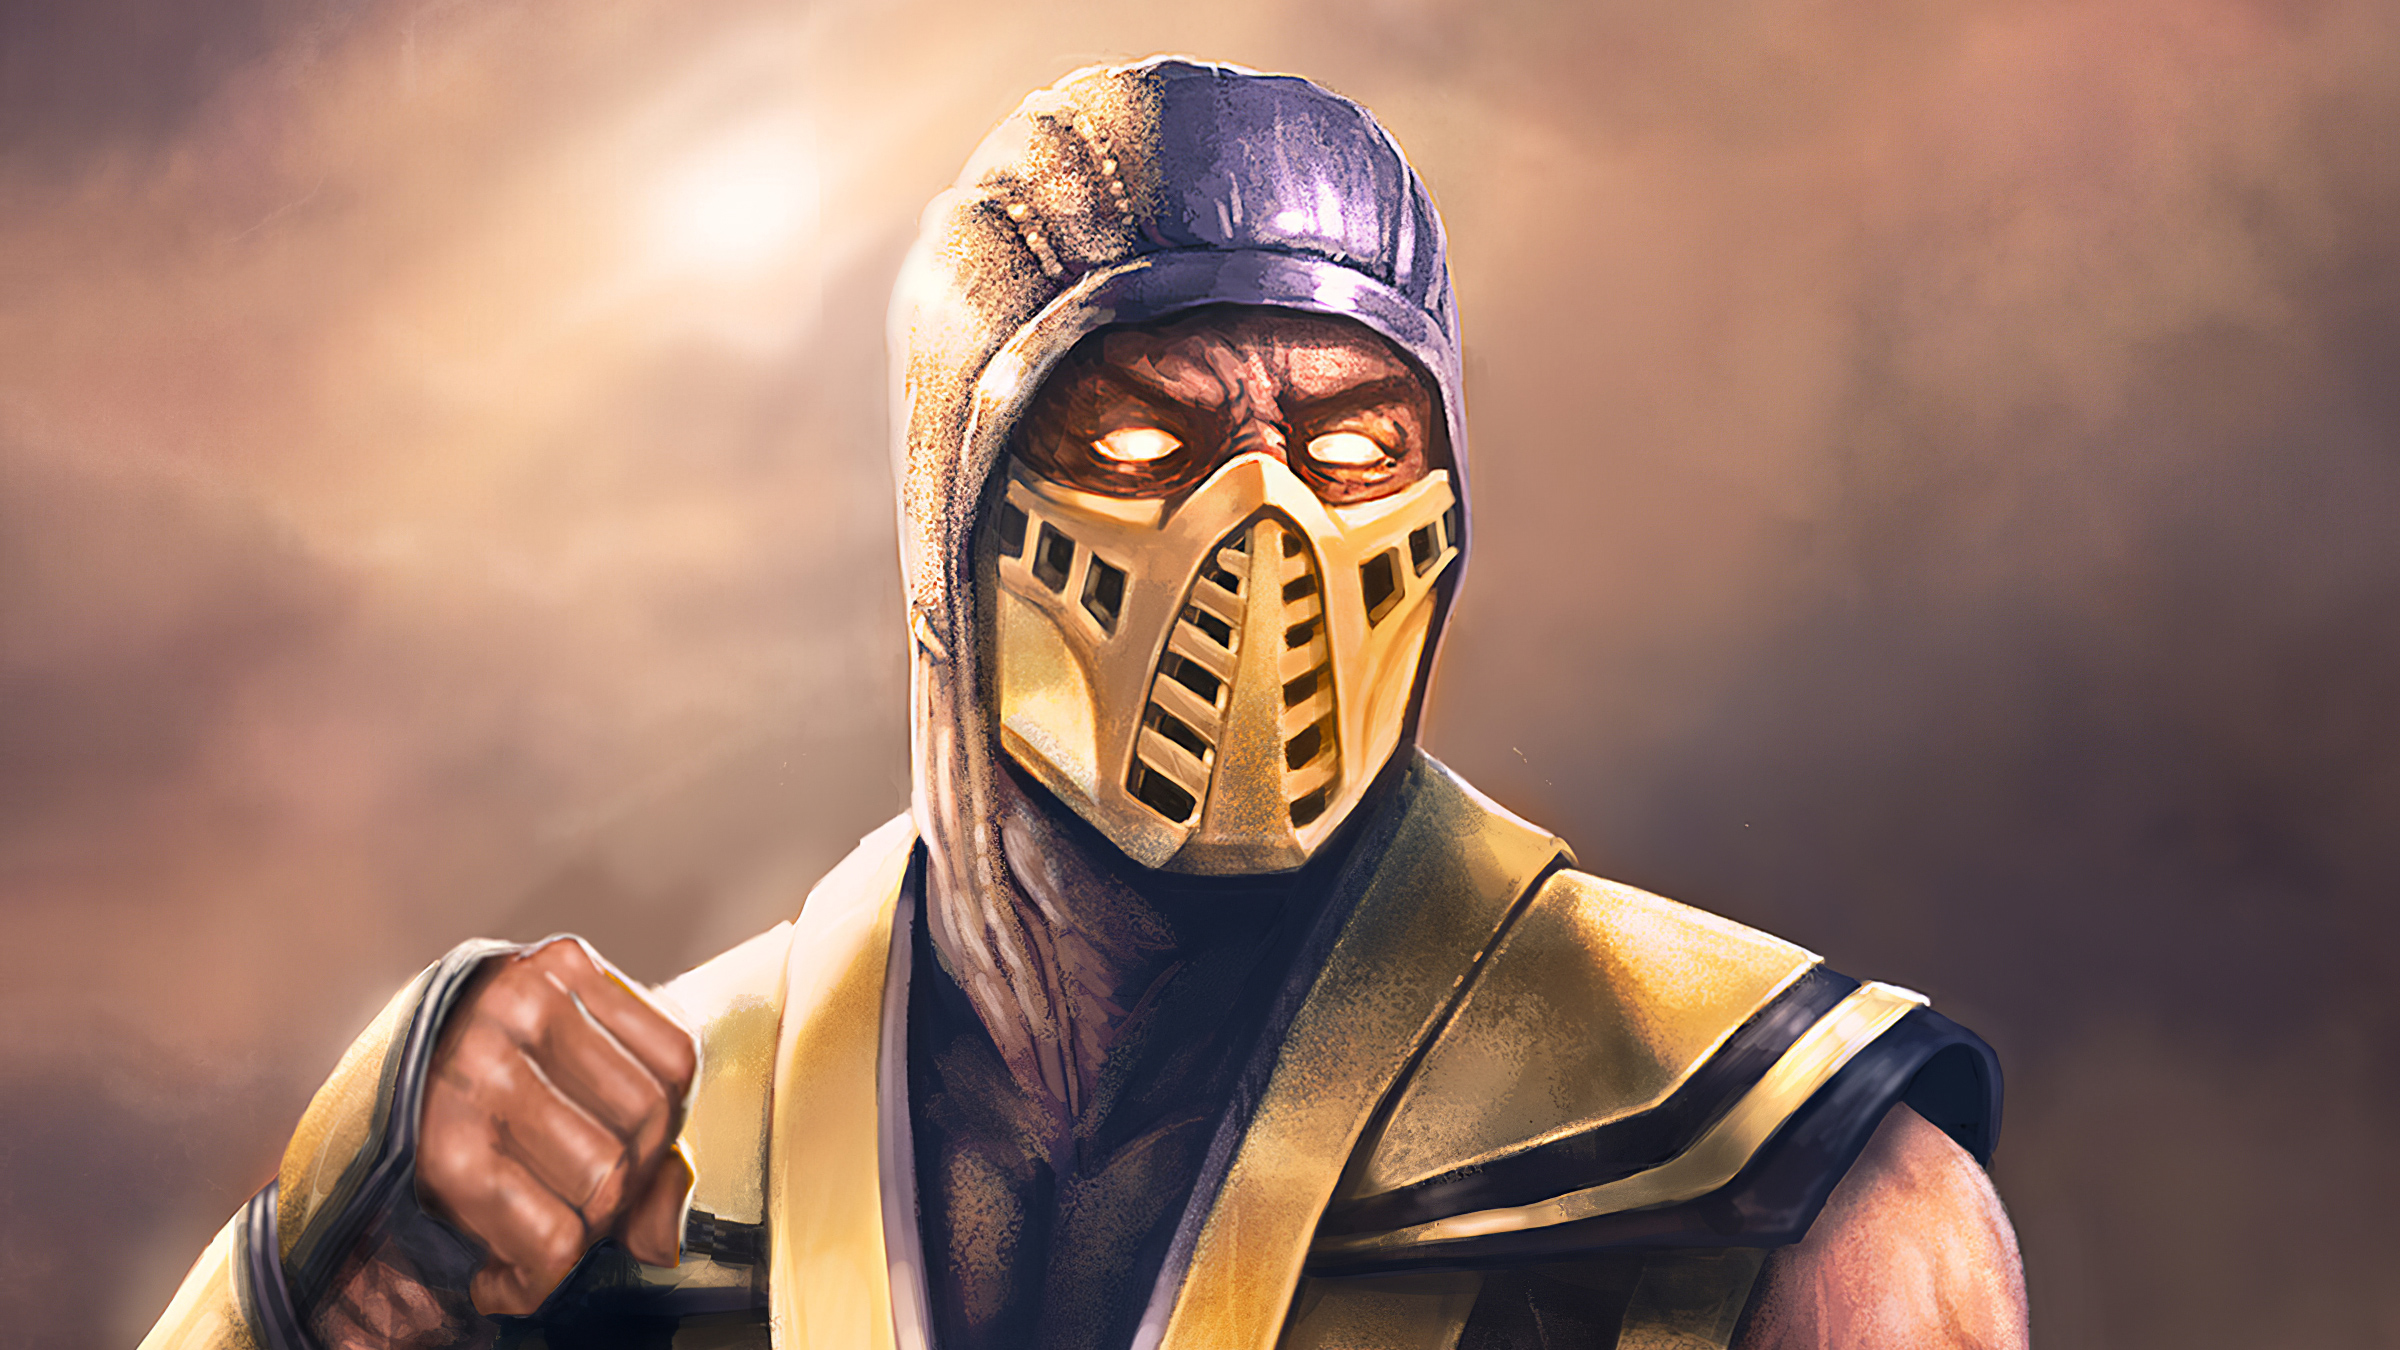 Video Game Mortal Kombat HD Wallpaper Background Image. 